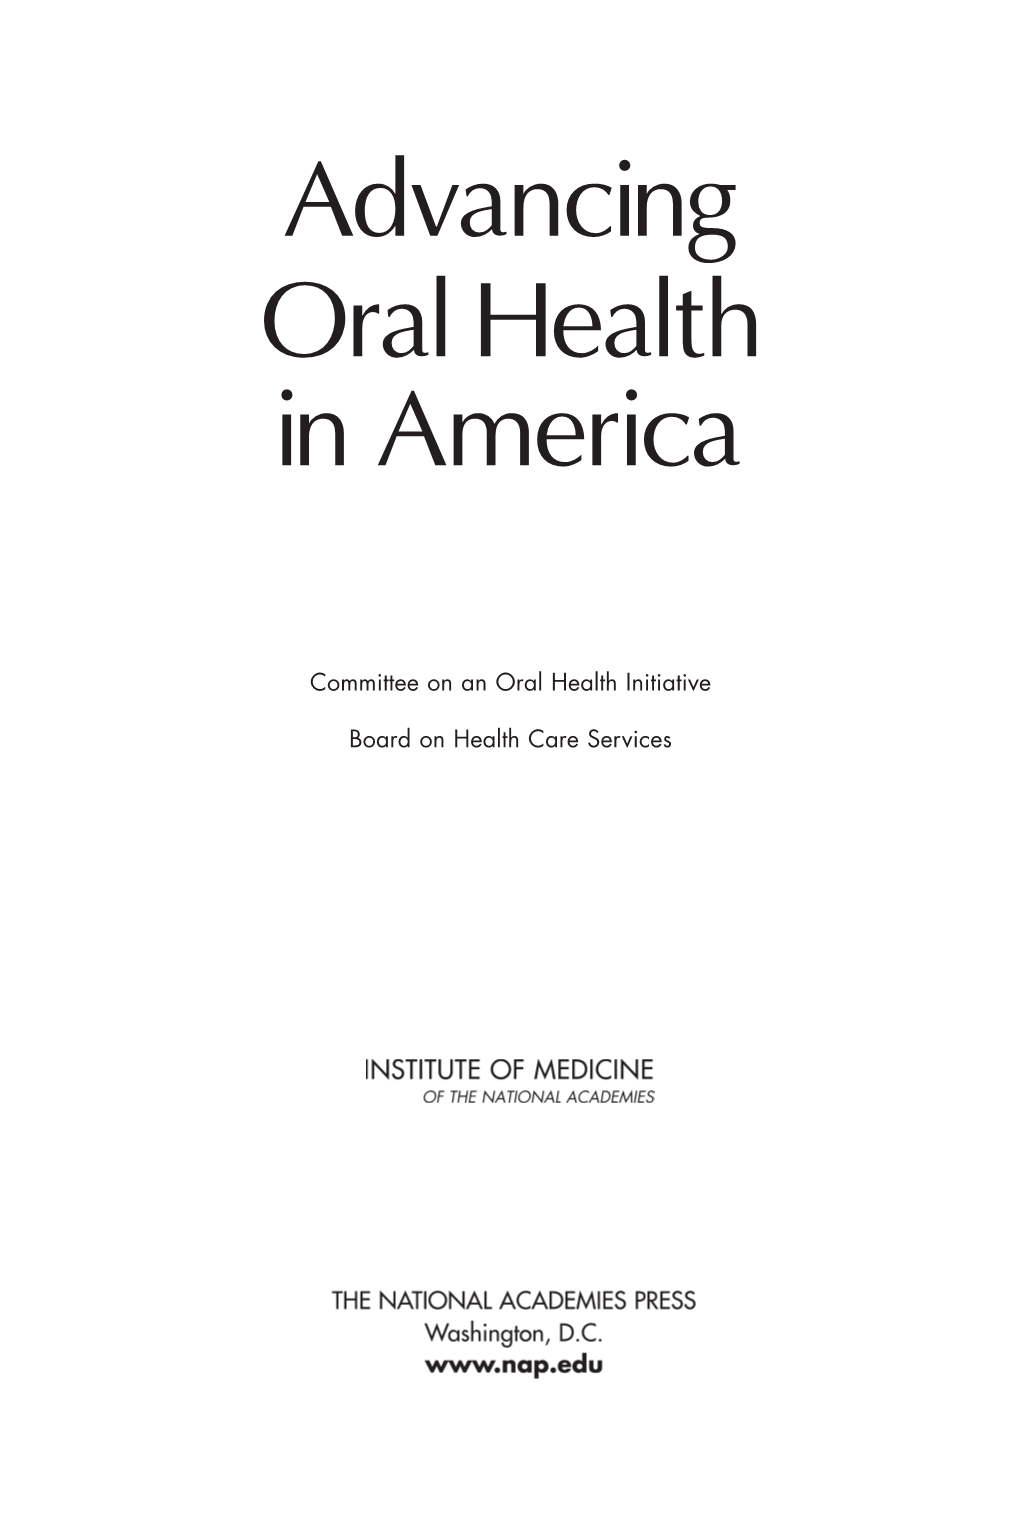 Advancing Oral Health in America